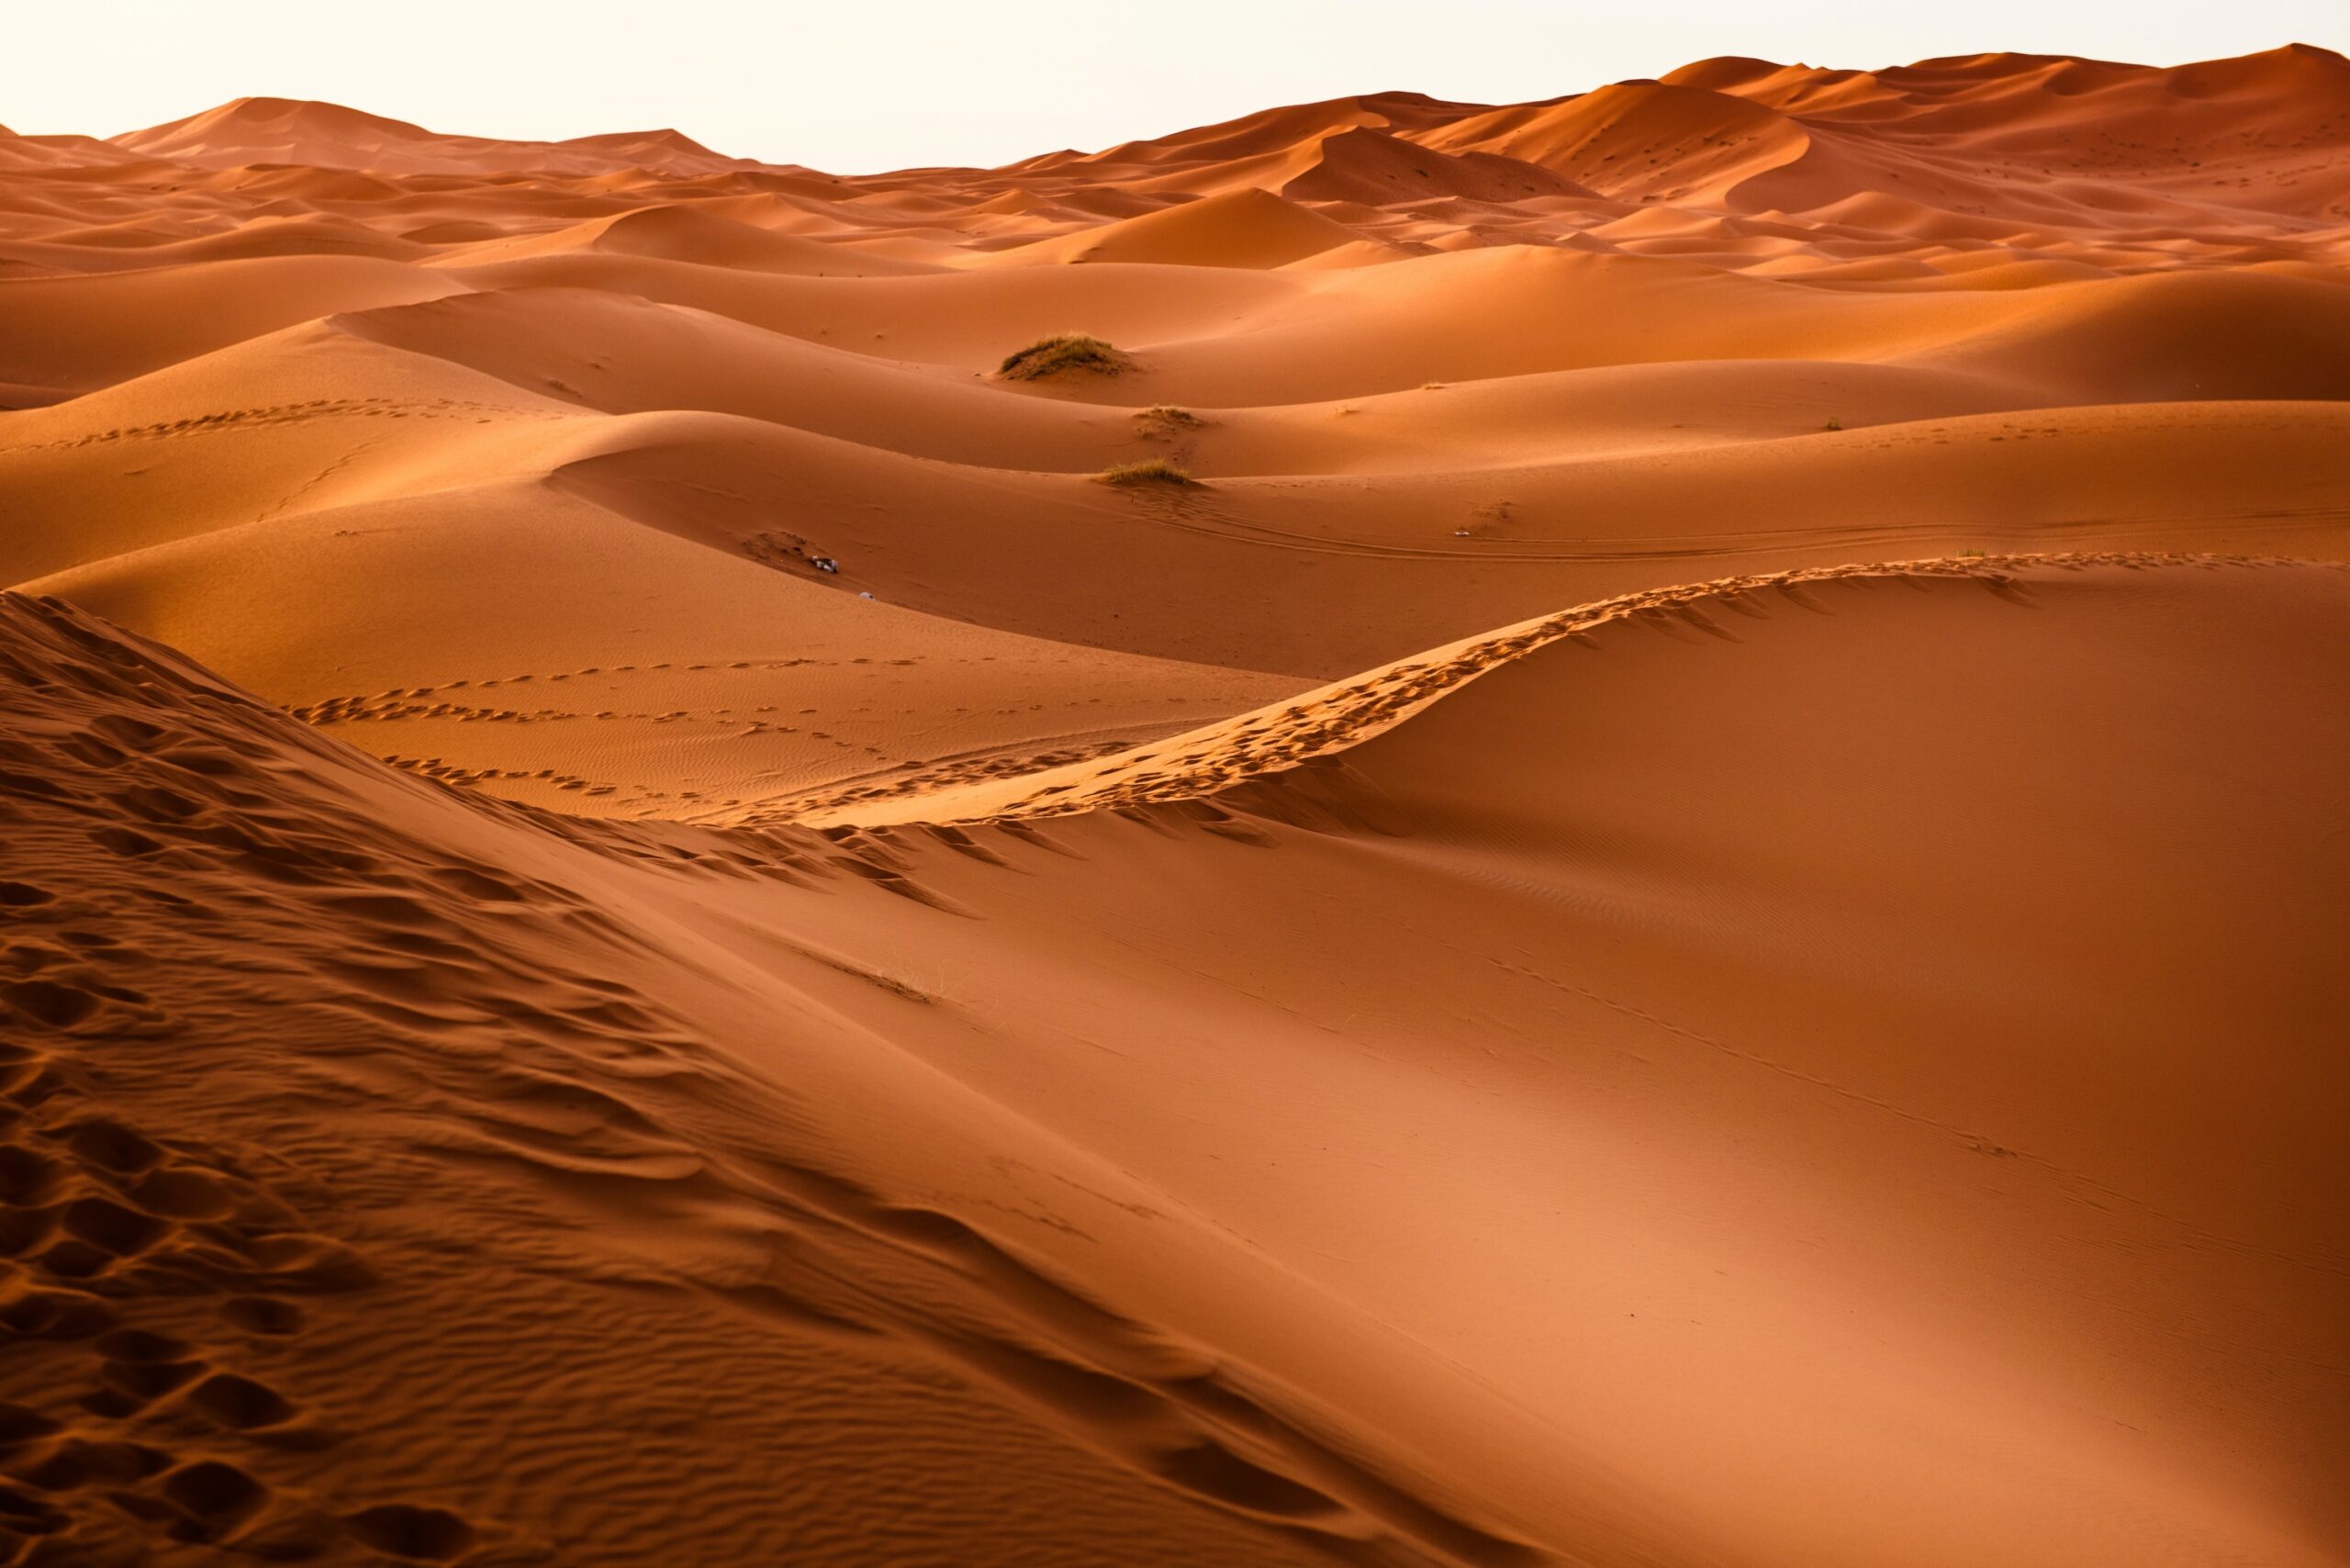 Developing a Novel Method for Monitoring Ecologically-Important Sand Dune Habitats Using Satellite Data